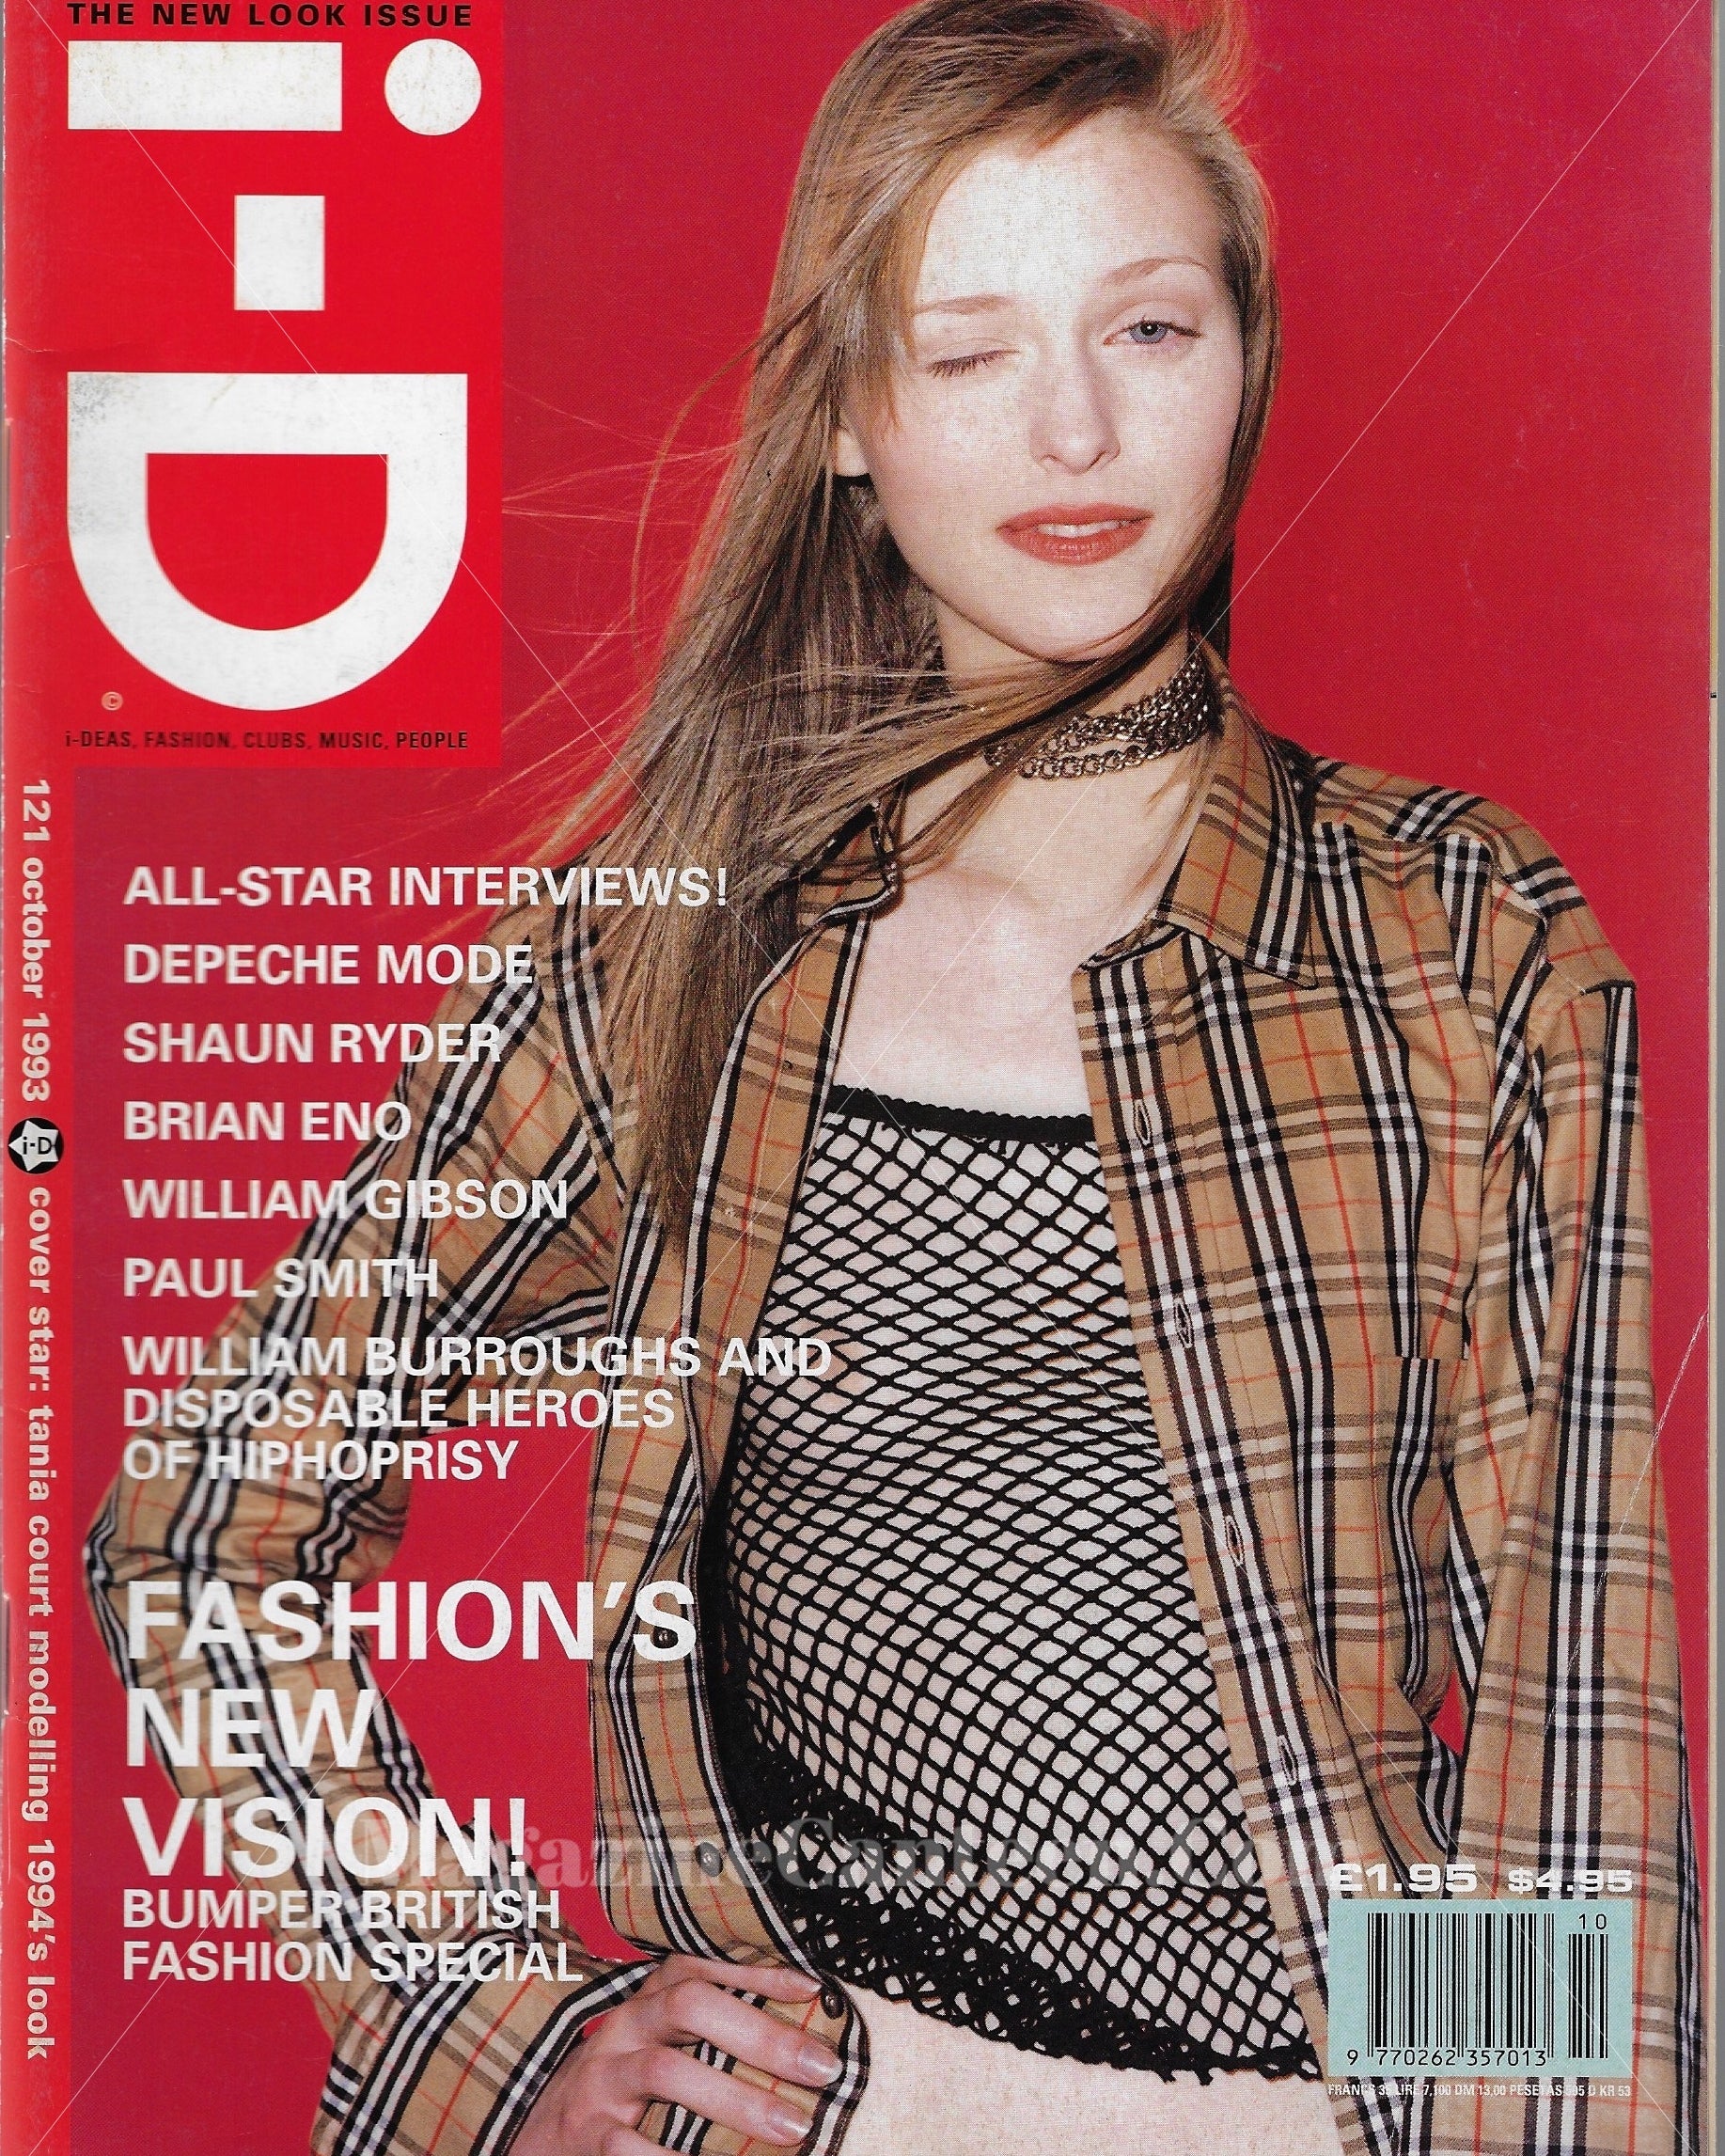 I-D Magazine 121 - Tania Court 1993